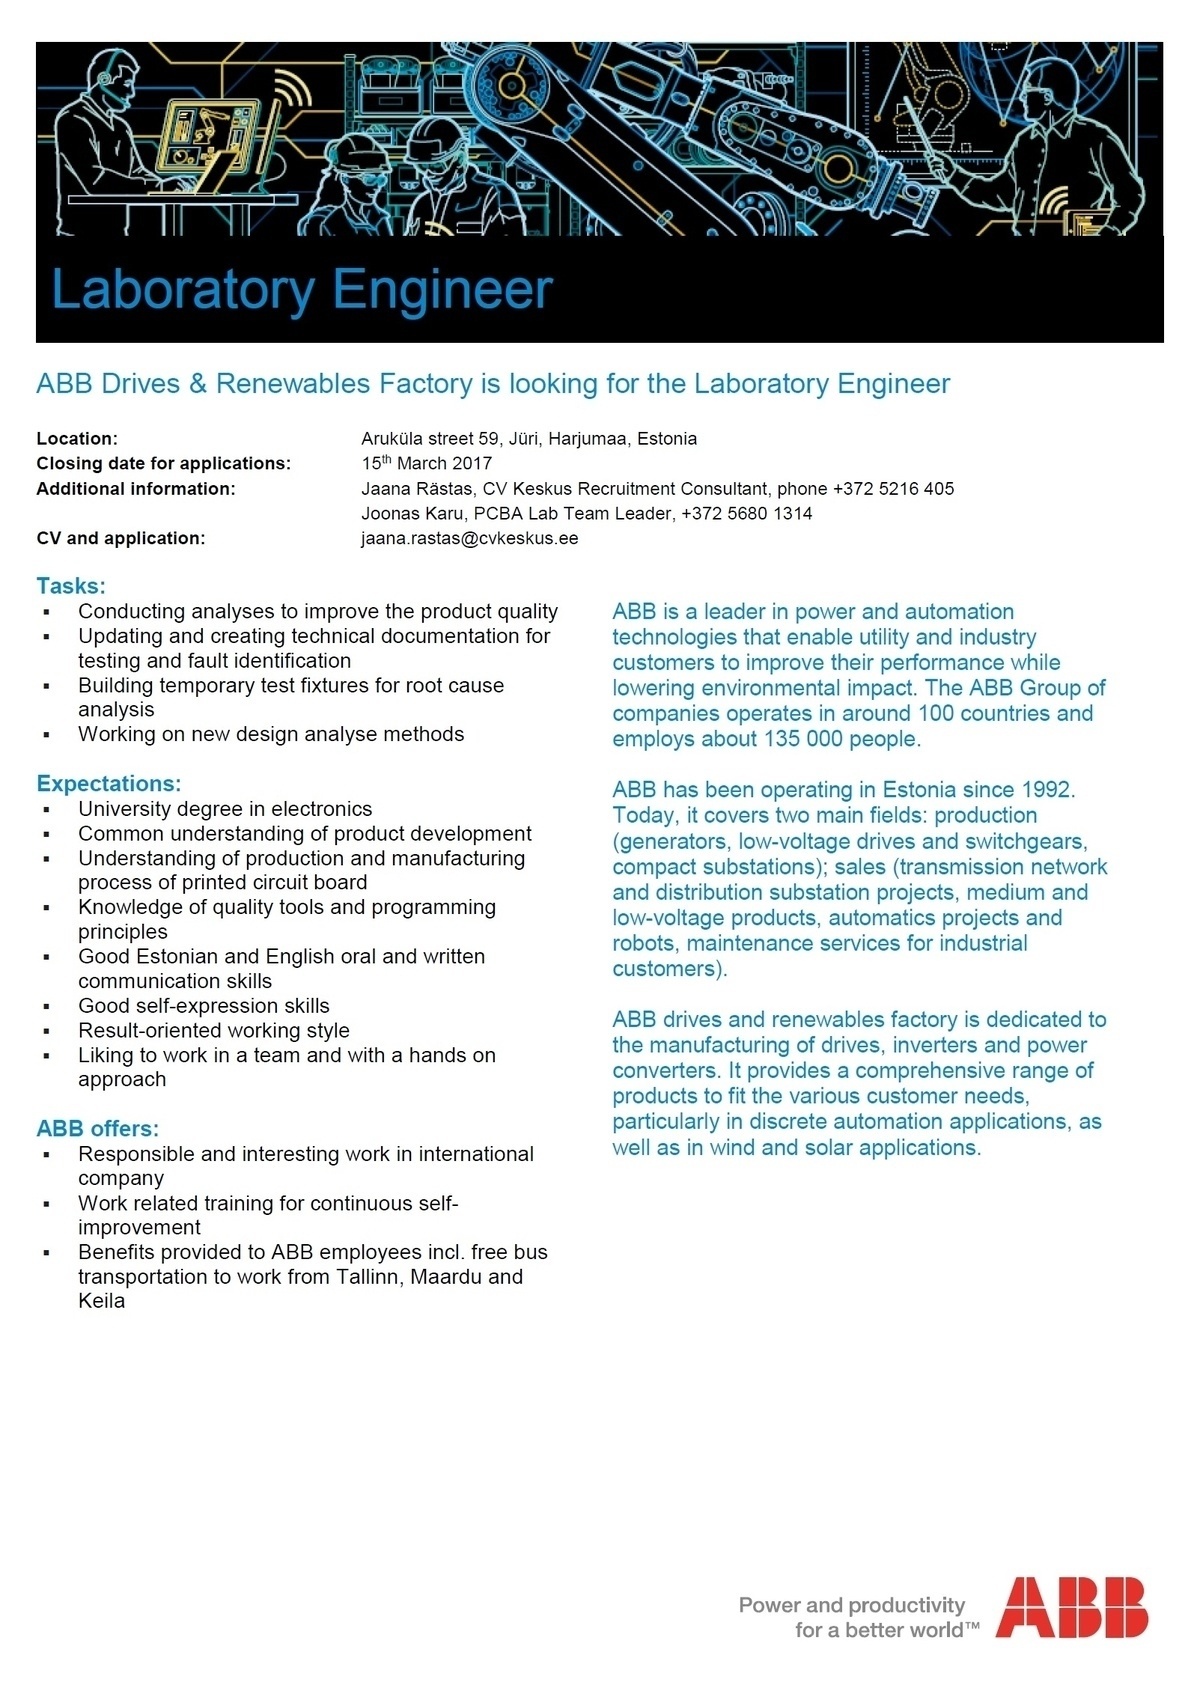 CV Keskus OÜ ABB is looking for a Laboratory Engineer